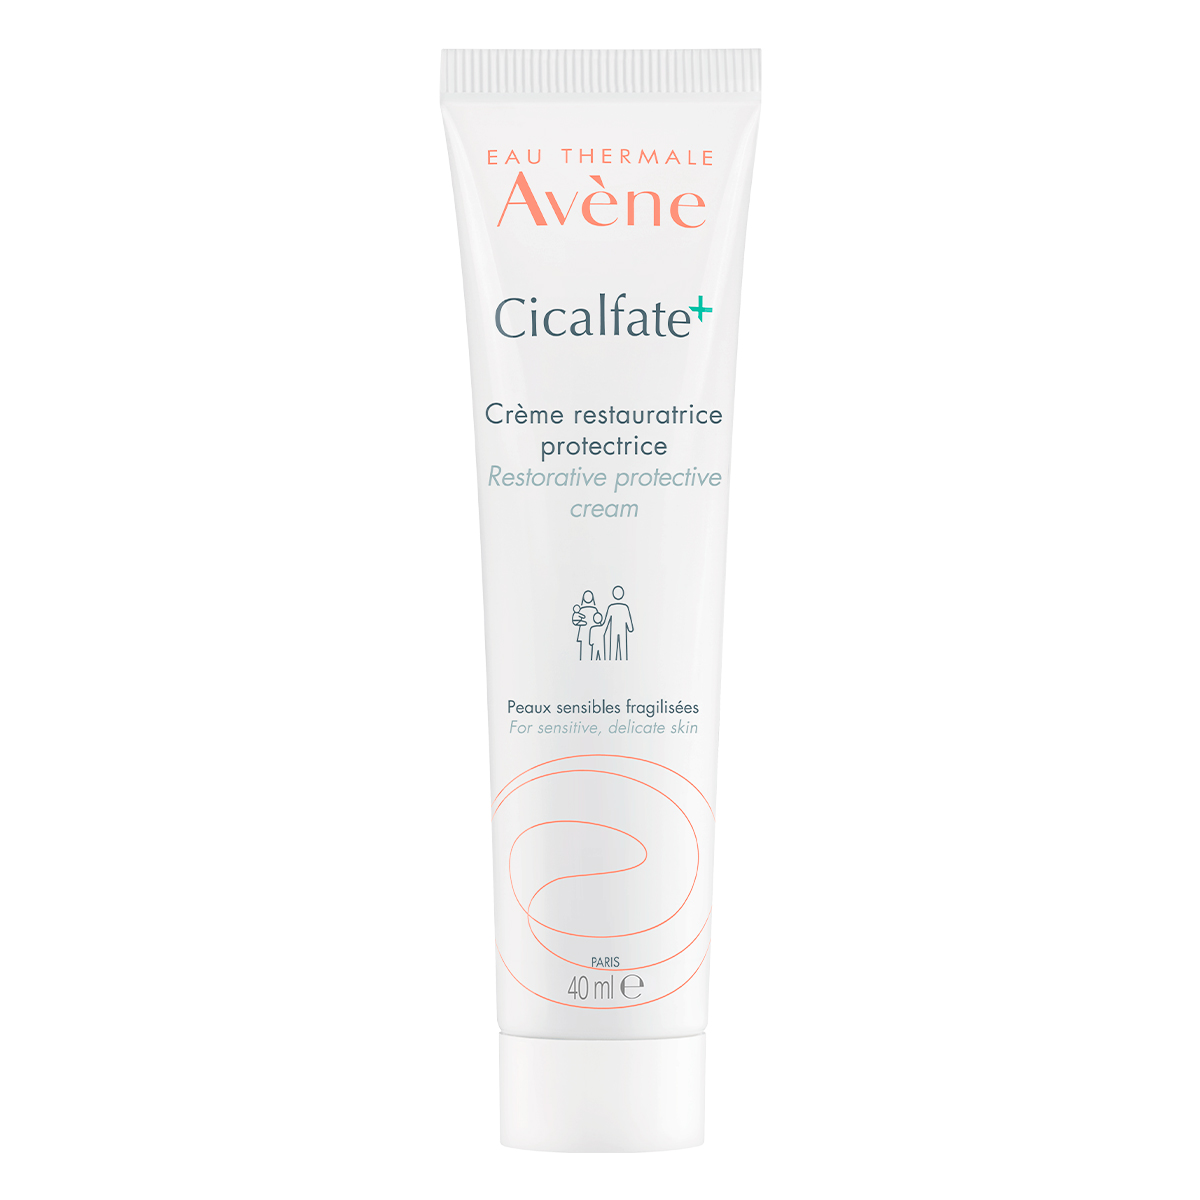 Avene Восстанавливающий защитный крем, 40 мл (Avene, Cicalfate) крем для тела avene крем восстанавливающий защитный cicalfate repairing protective cream